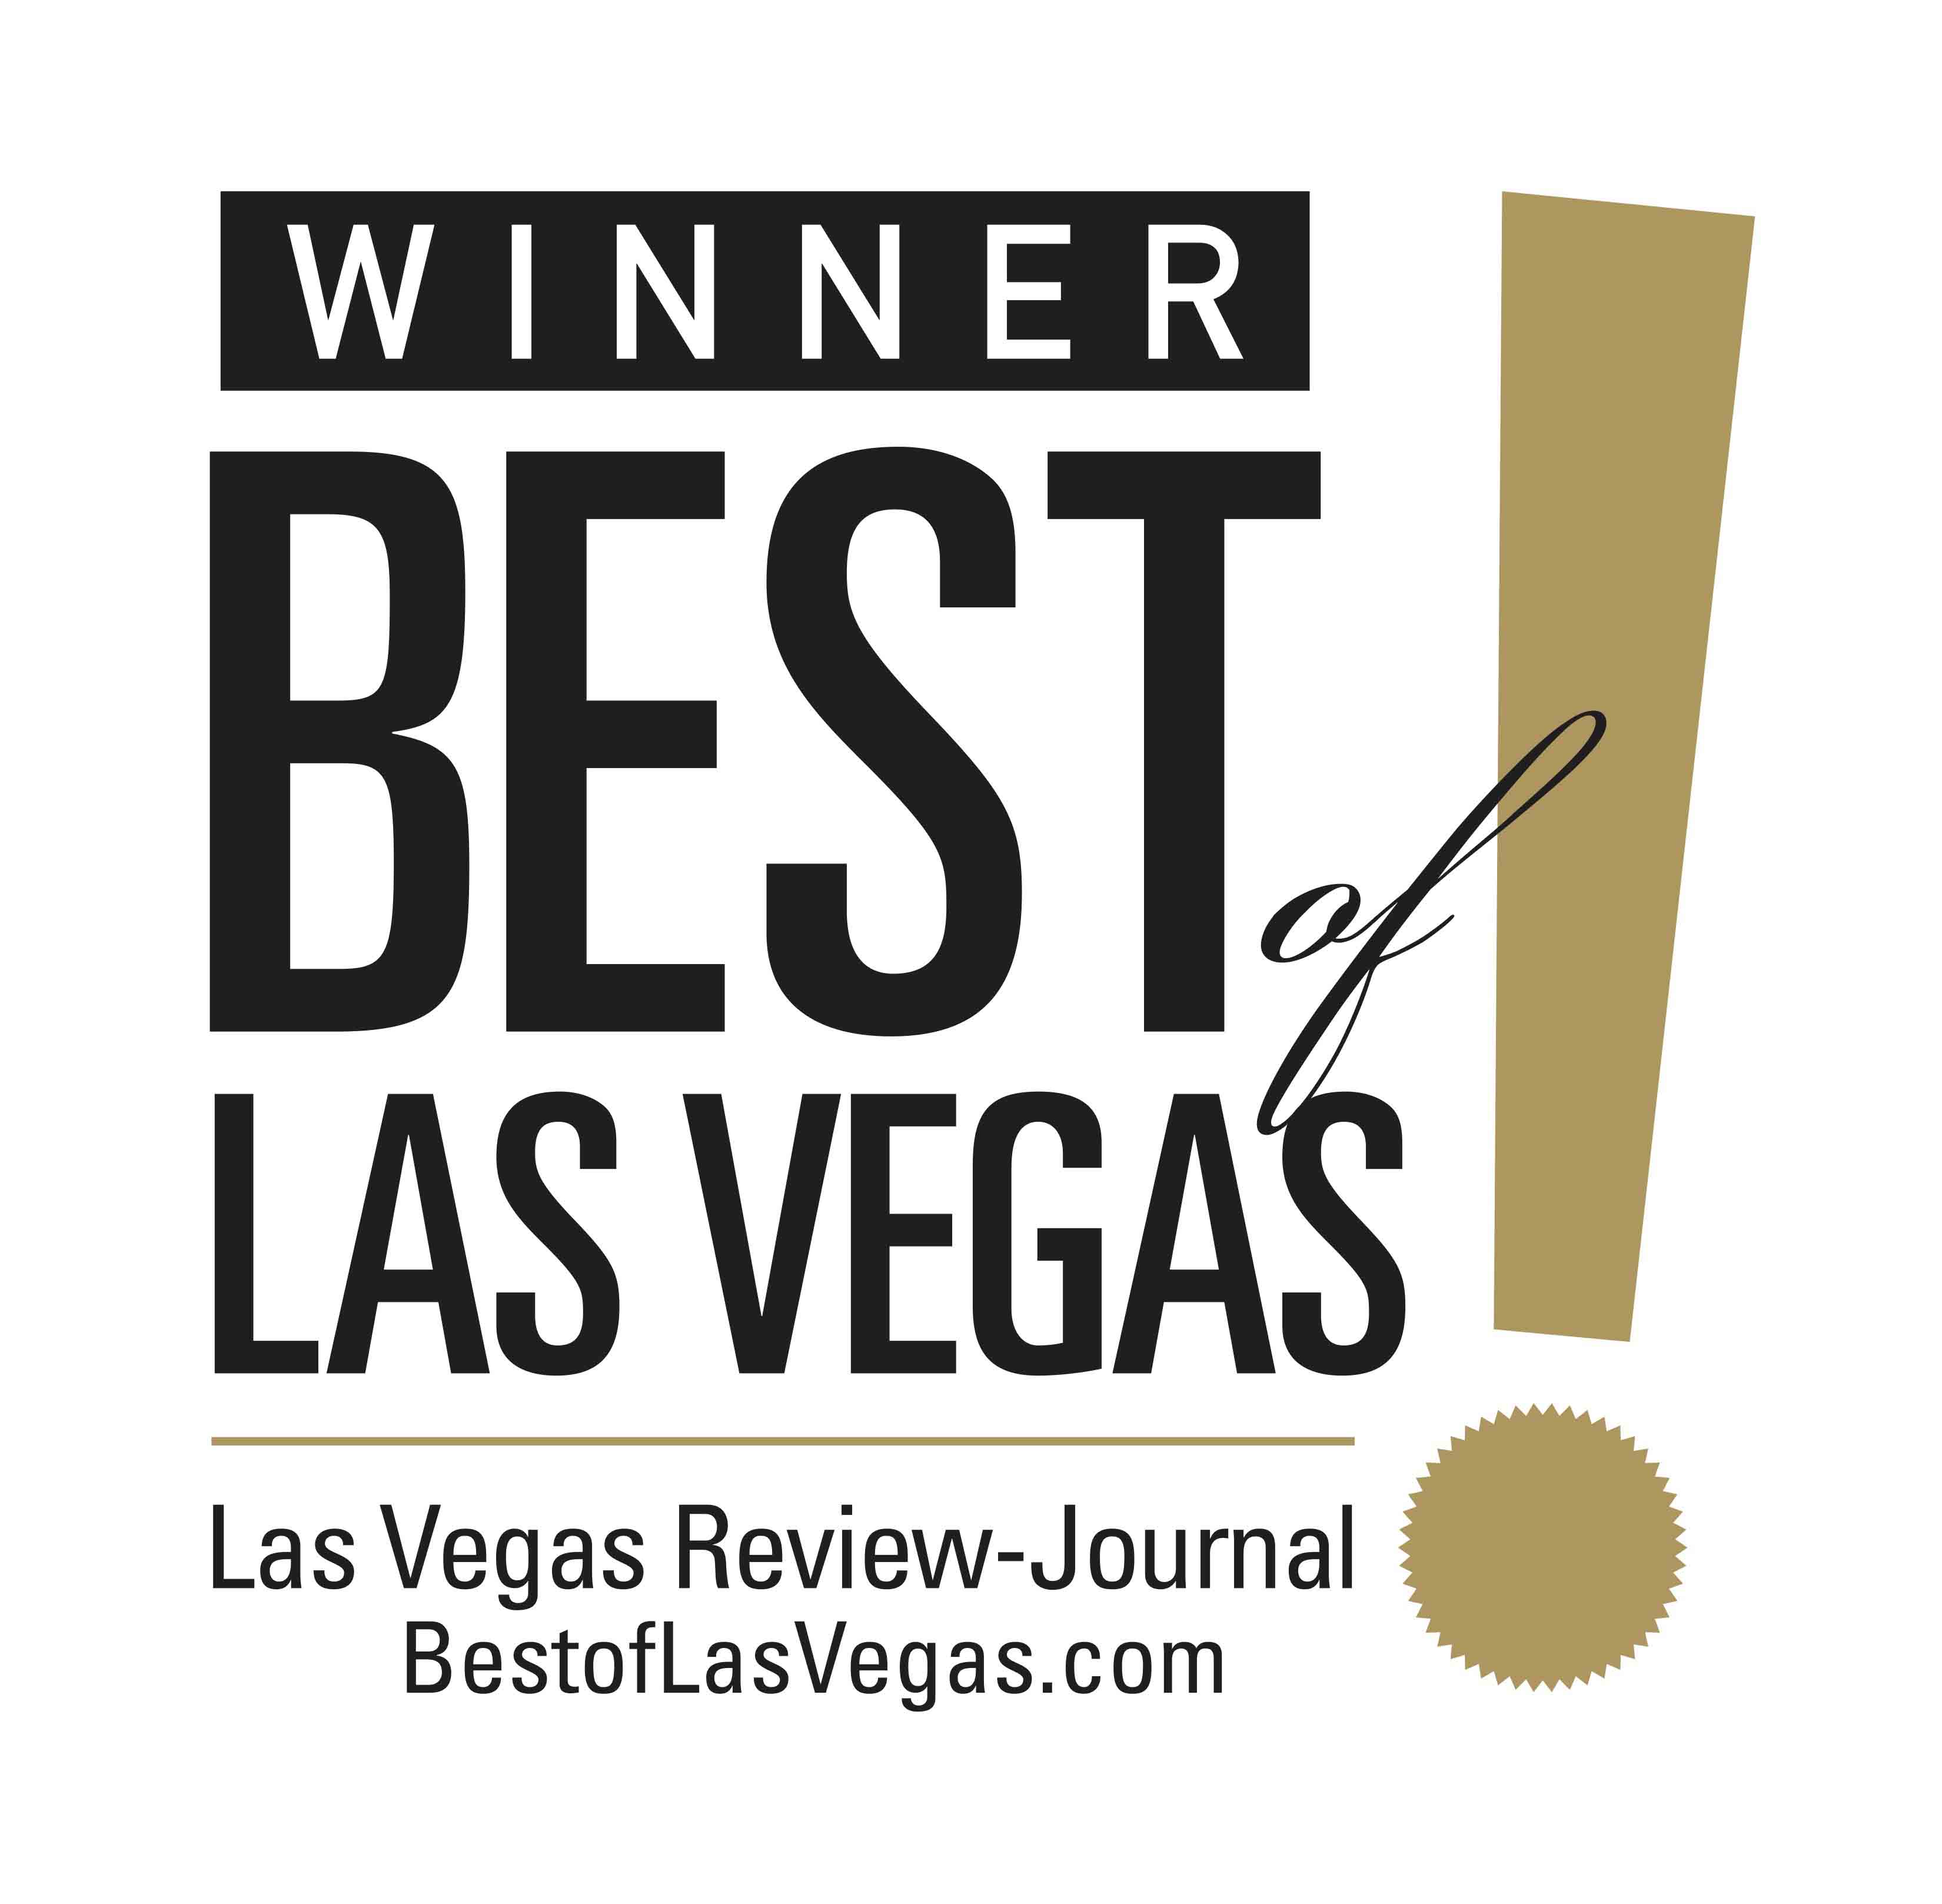 Best of Las Vegas award